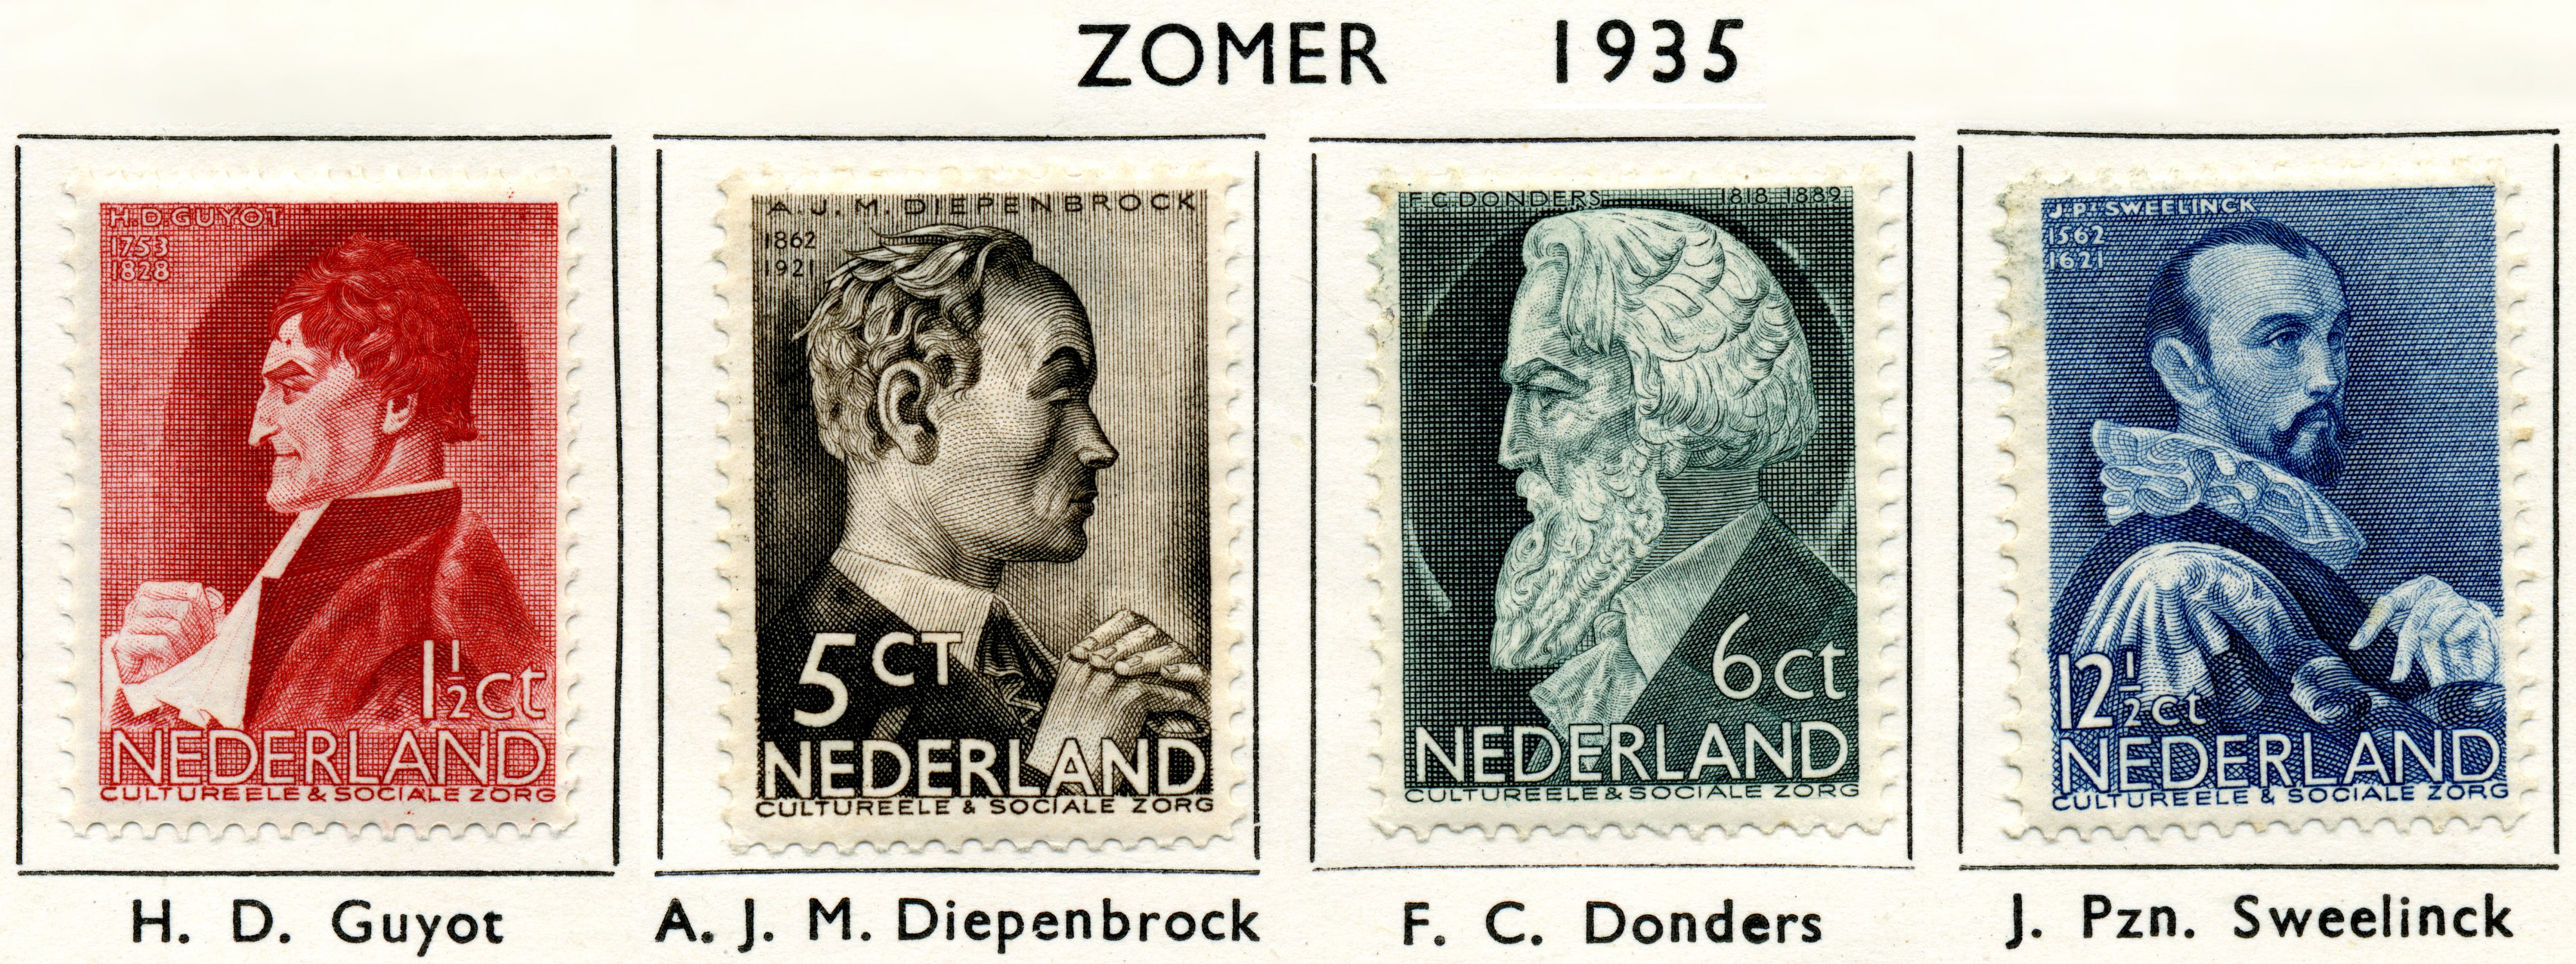 Postzegel 1935 zomer